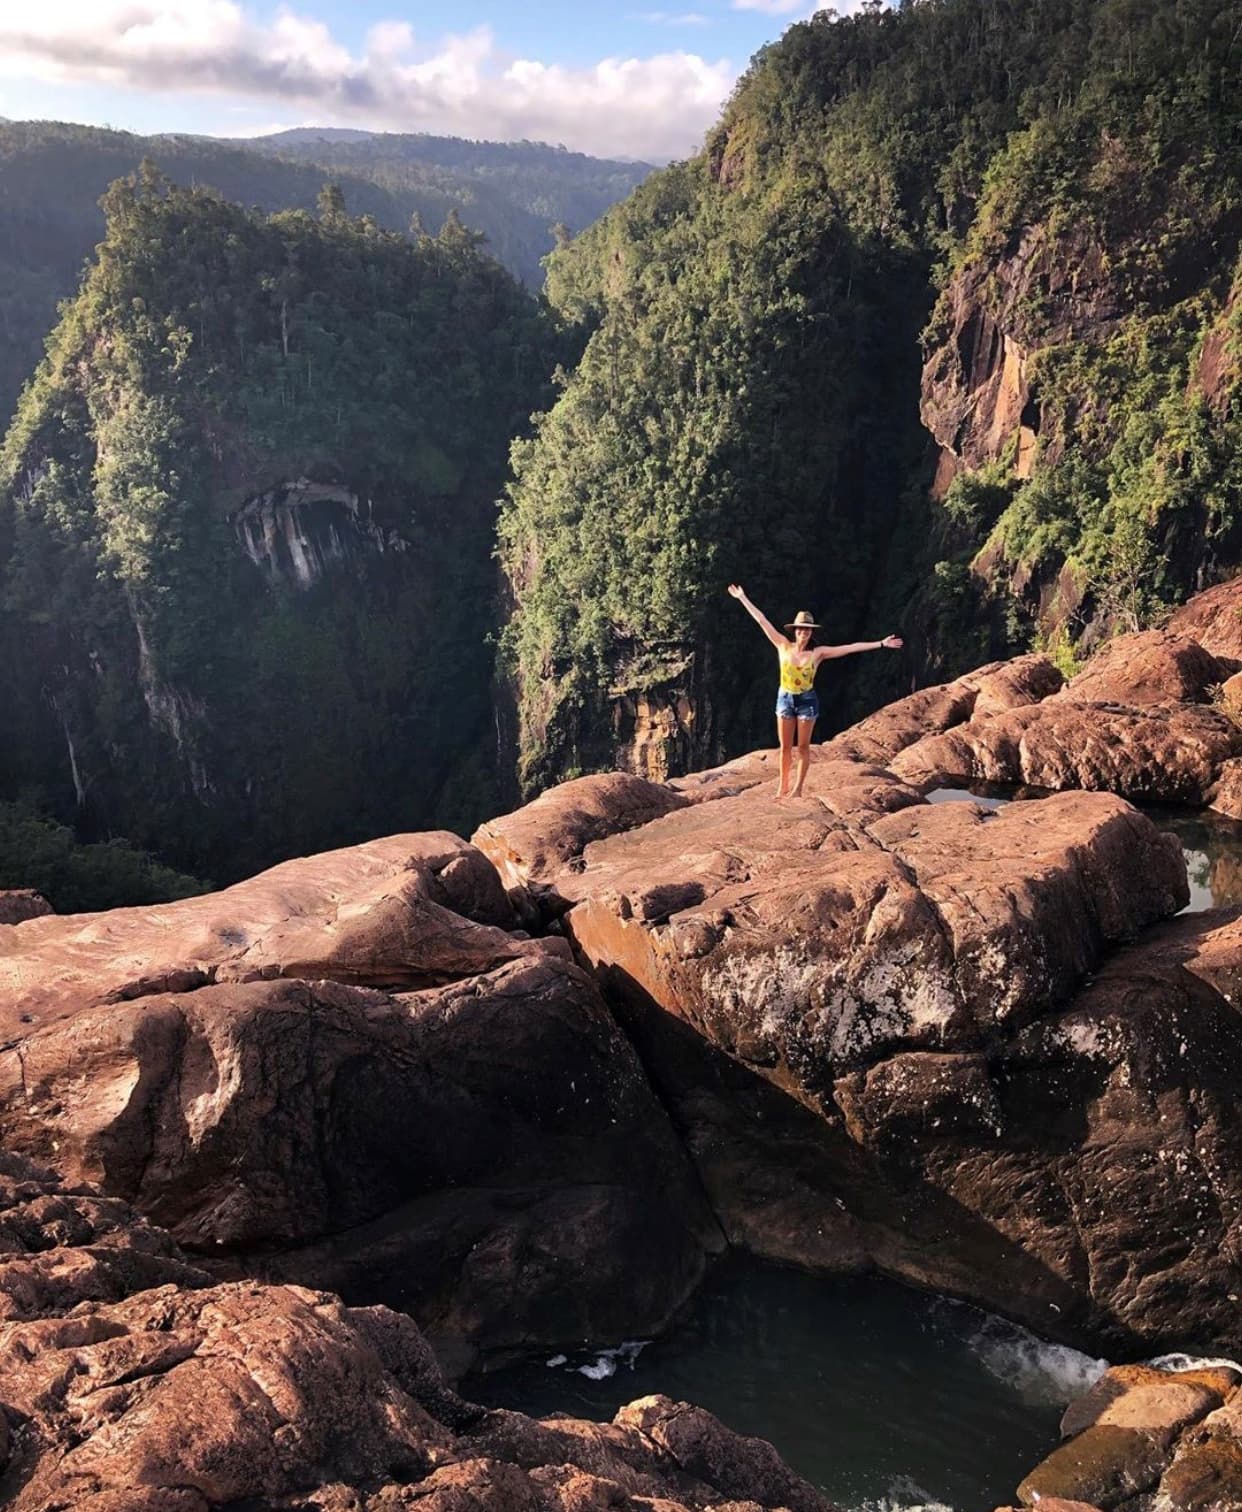 Carolyn Reimann on a cliff edge in the tropics